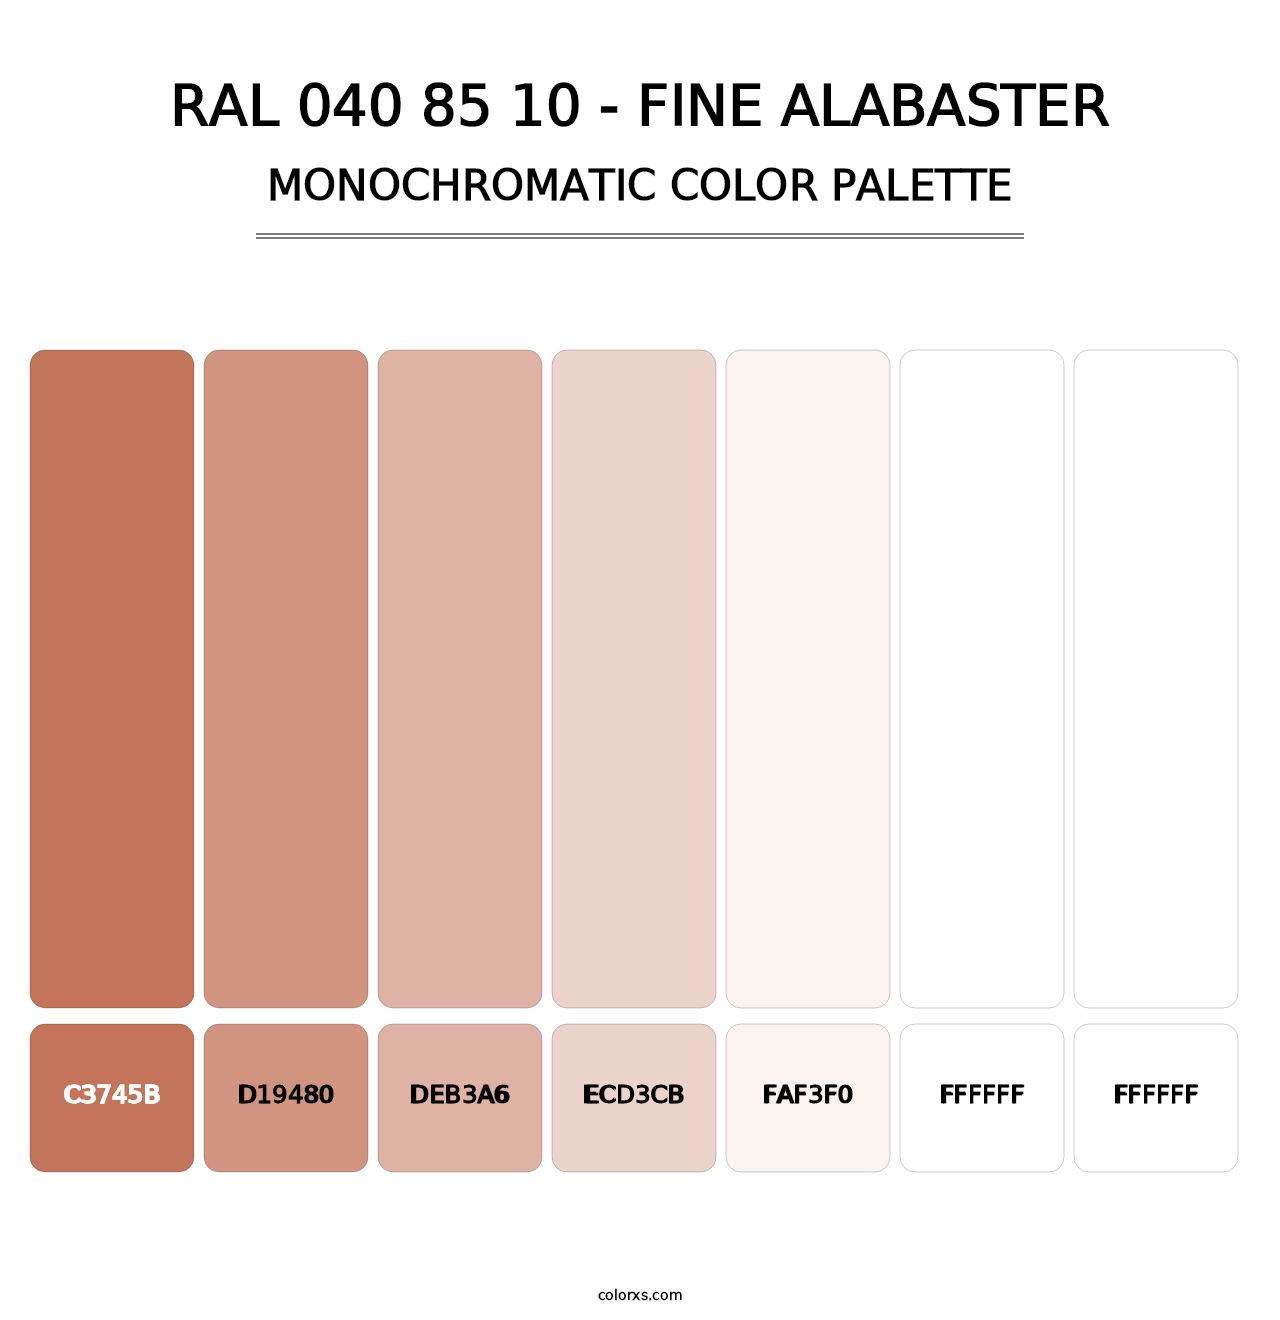 RAL 040 85 10 - Fine Alabaster - Monochromatic Color Palette